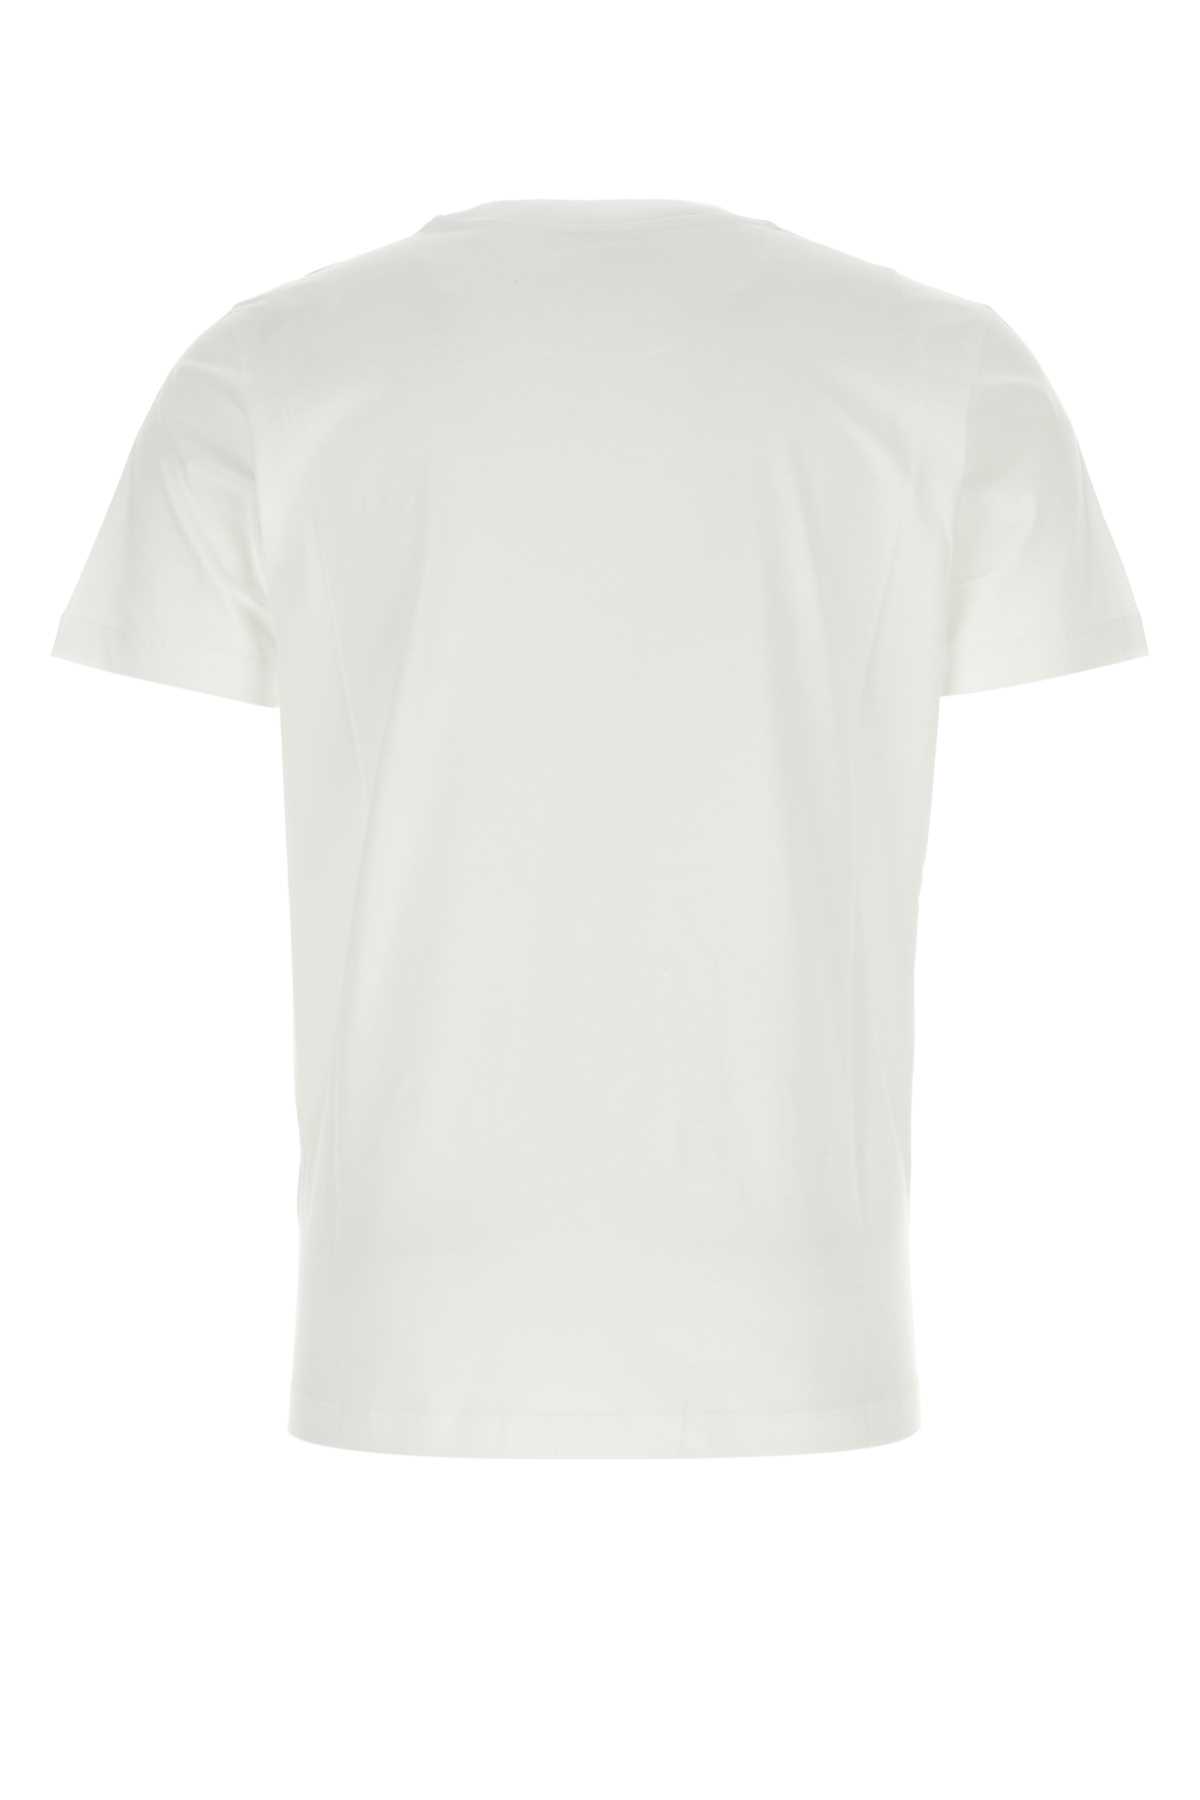 Marni White Cotton T-shirt In Lilywhite